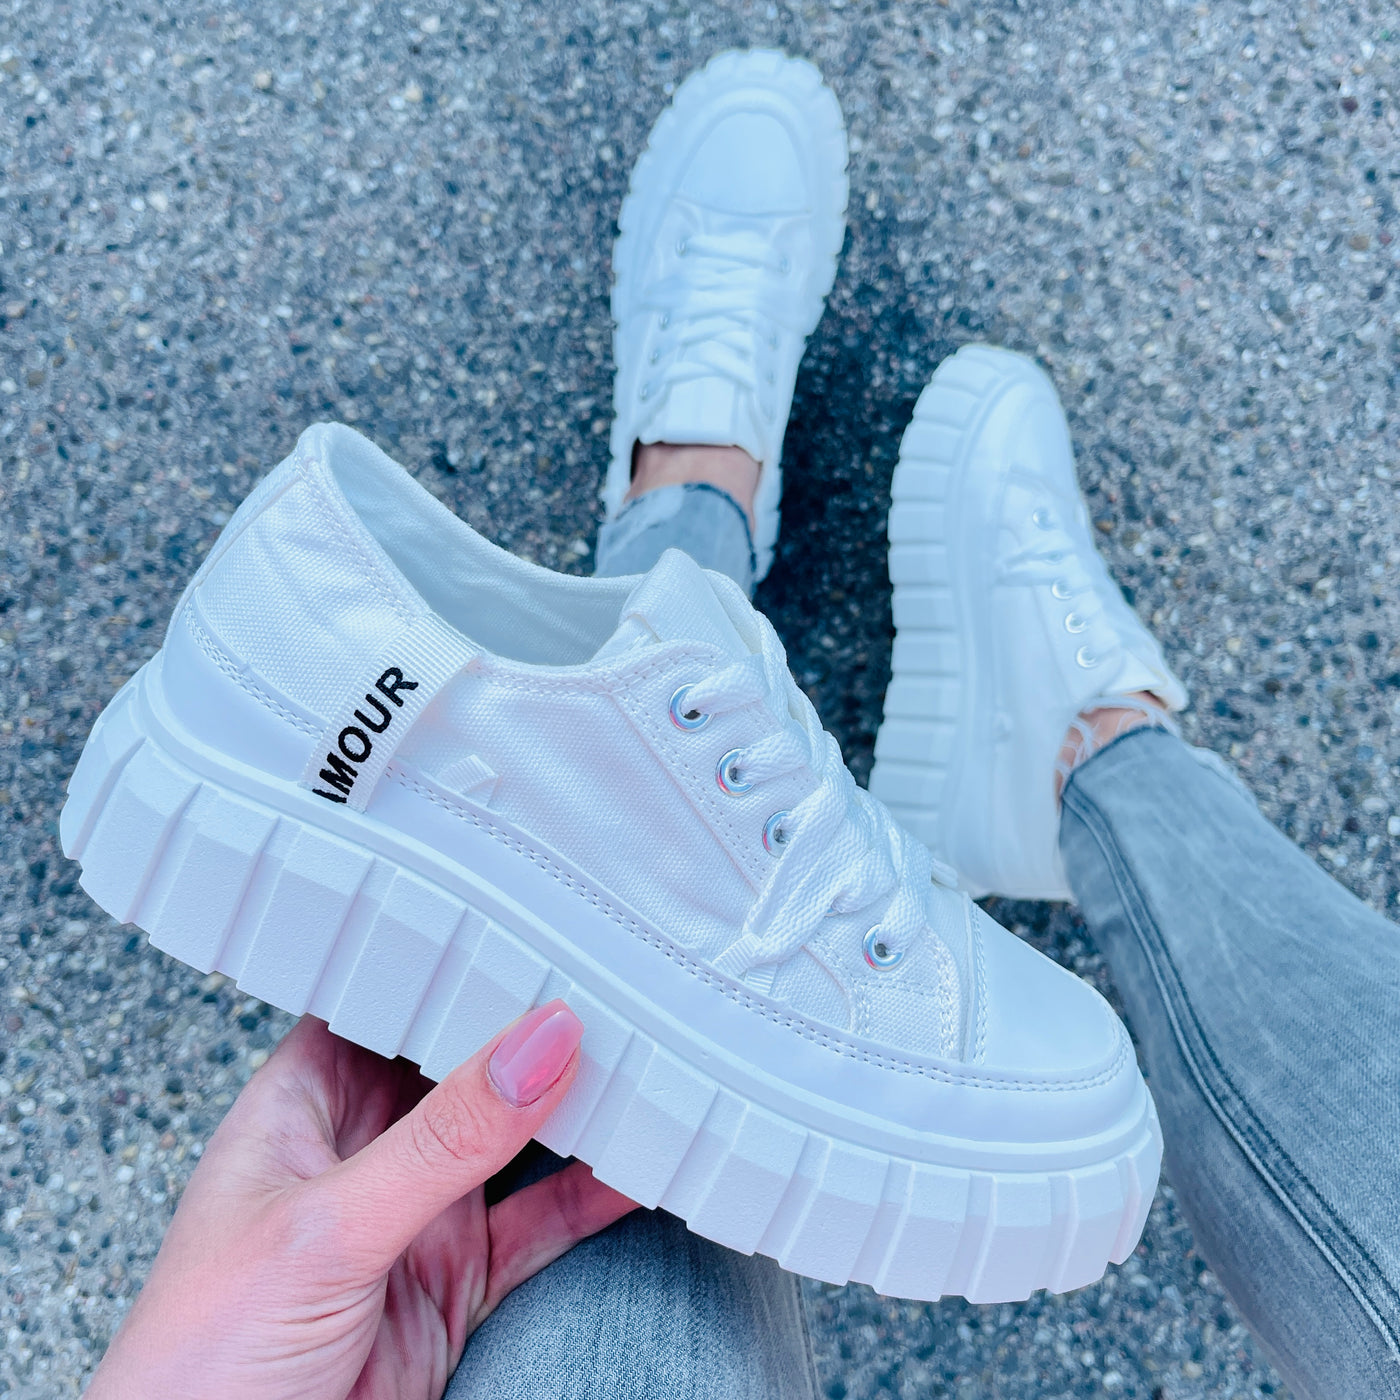 Amour White Sneaker